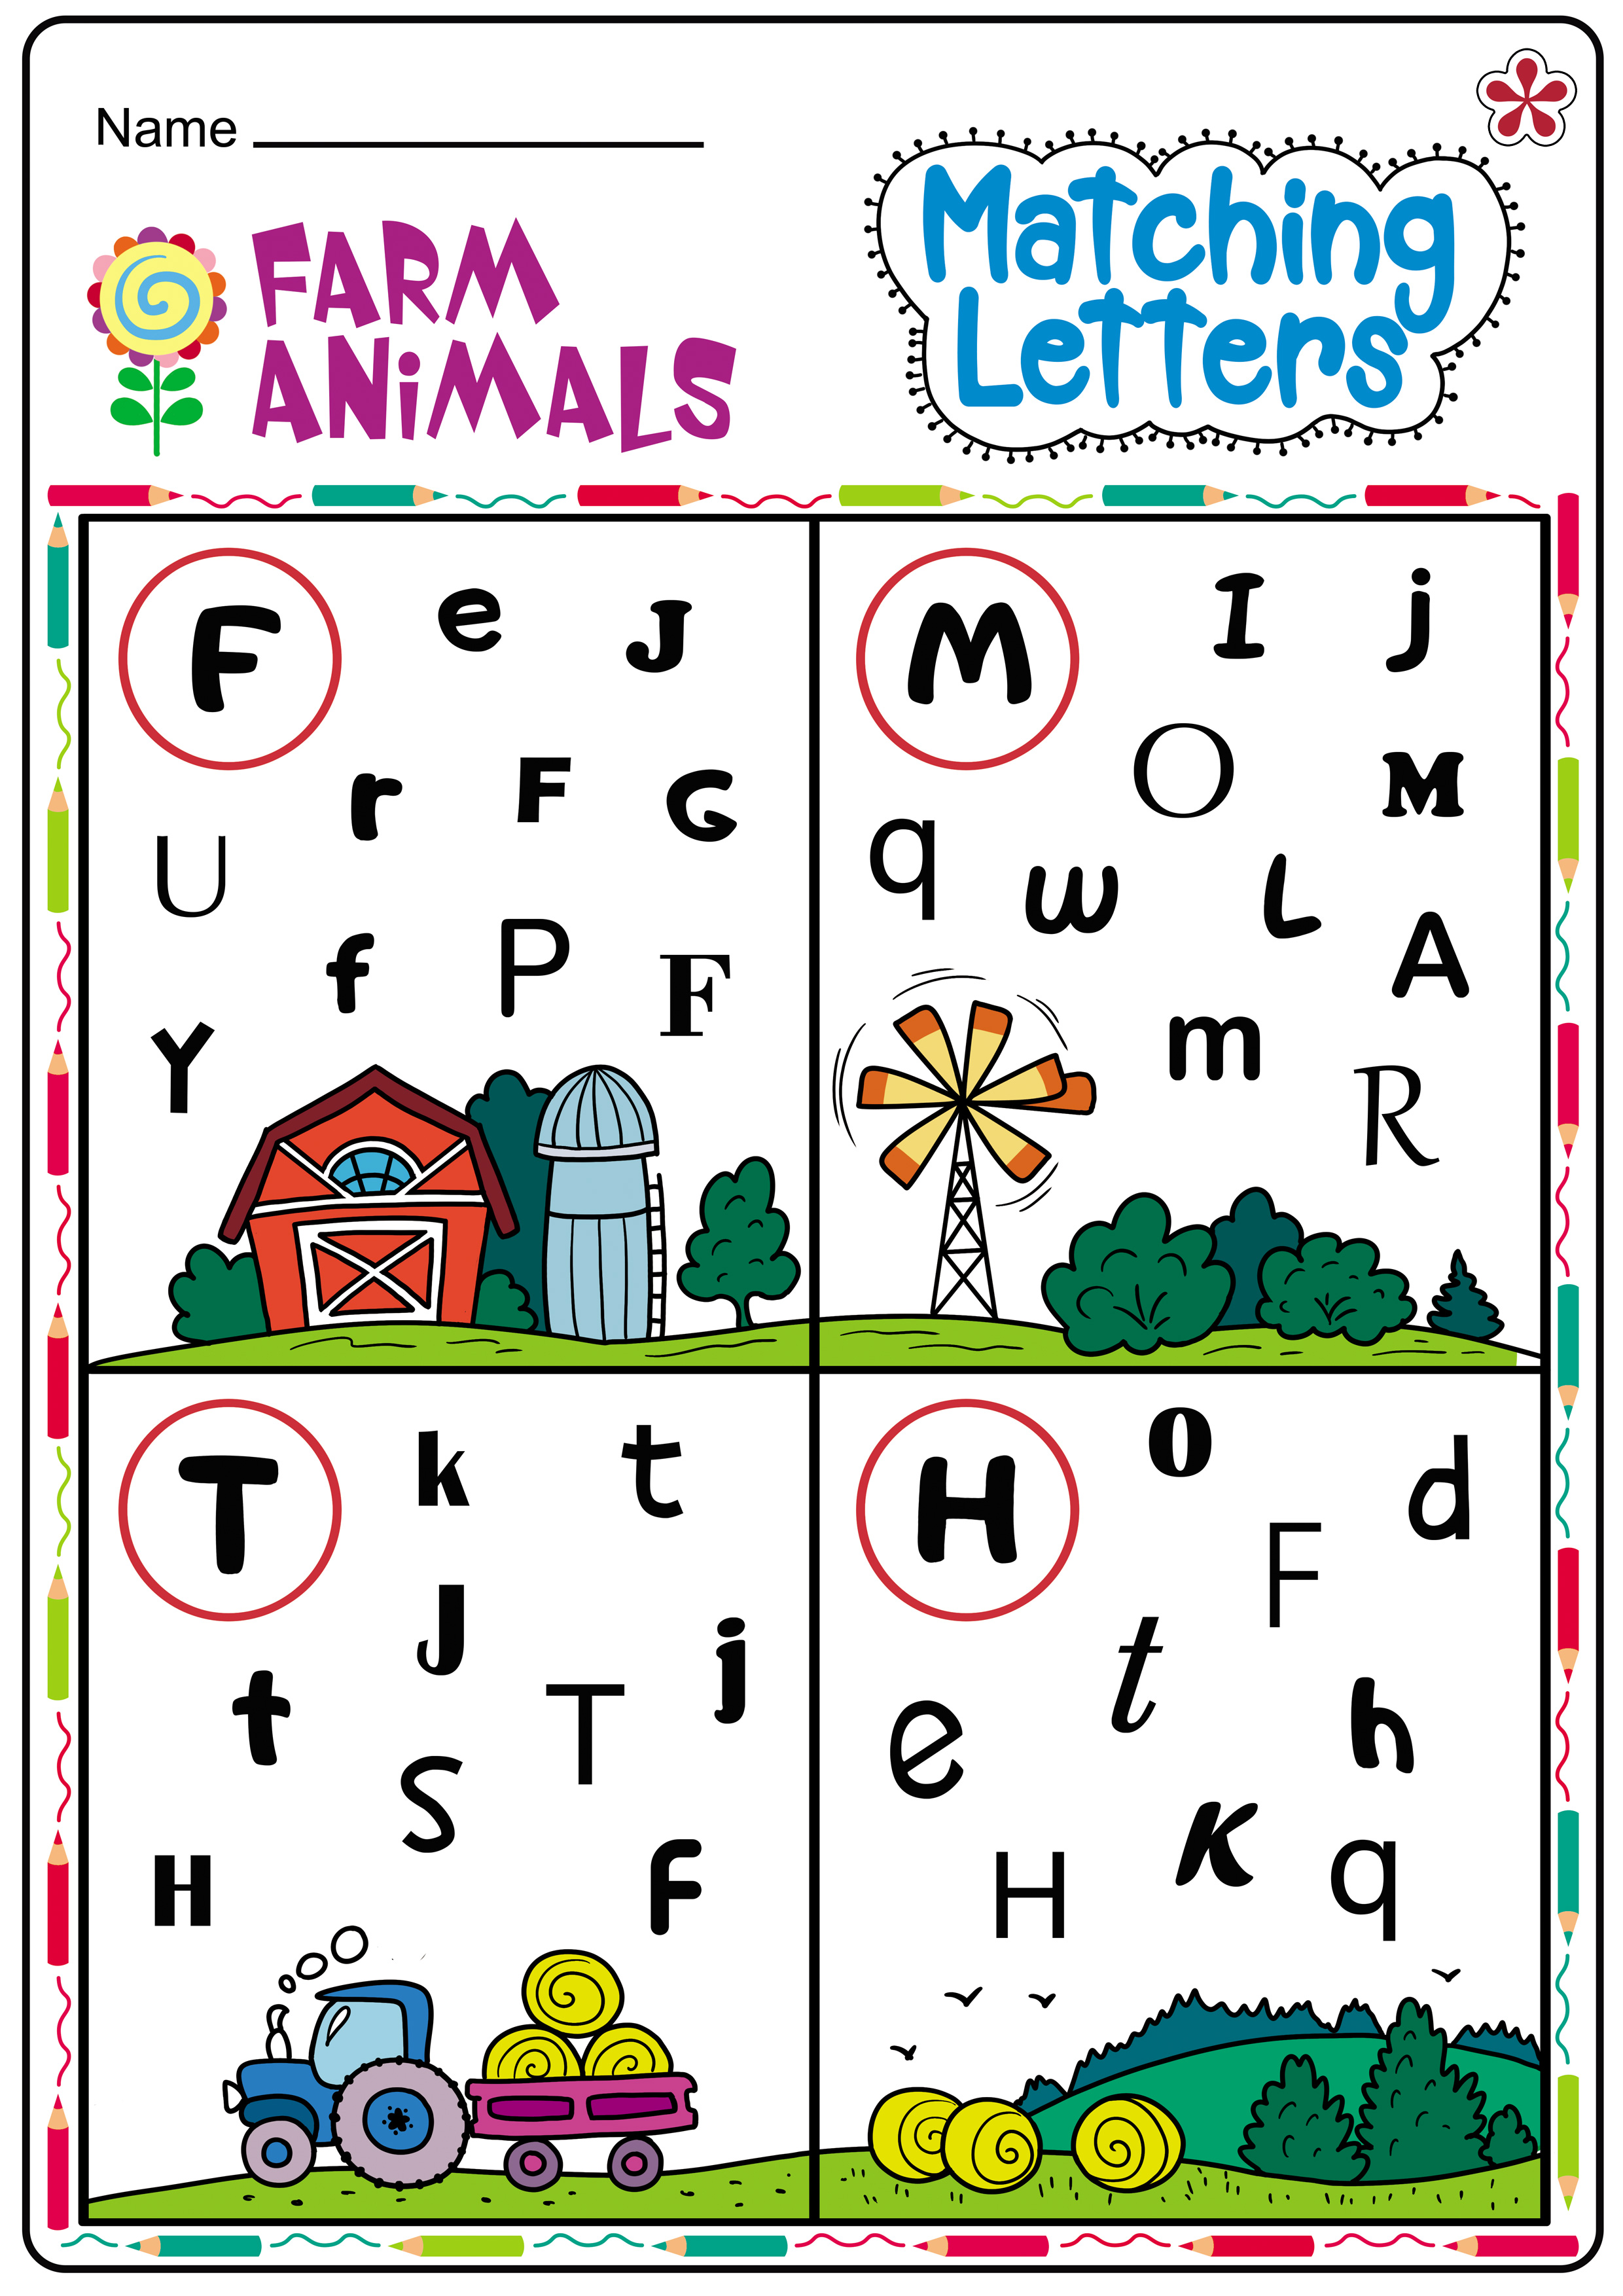 Free Printable Farm Animal Worksheets for Preschoolers | TeachersMag.com